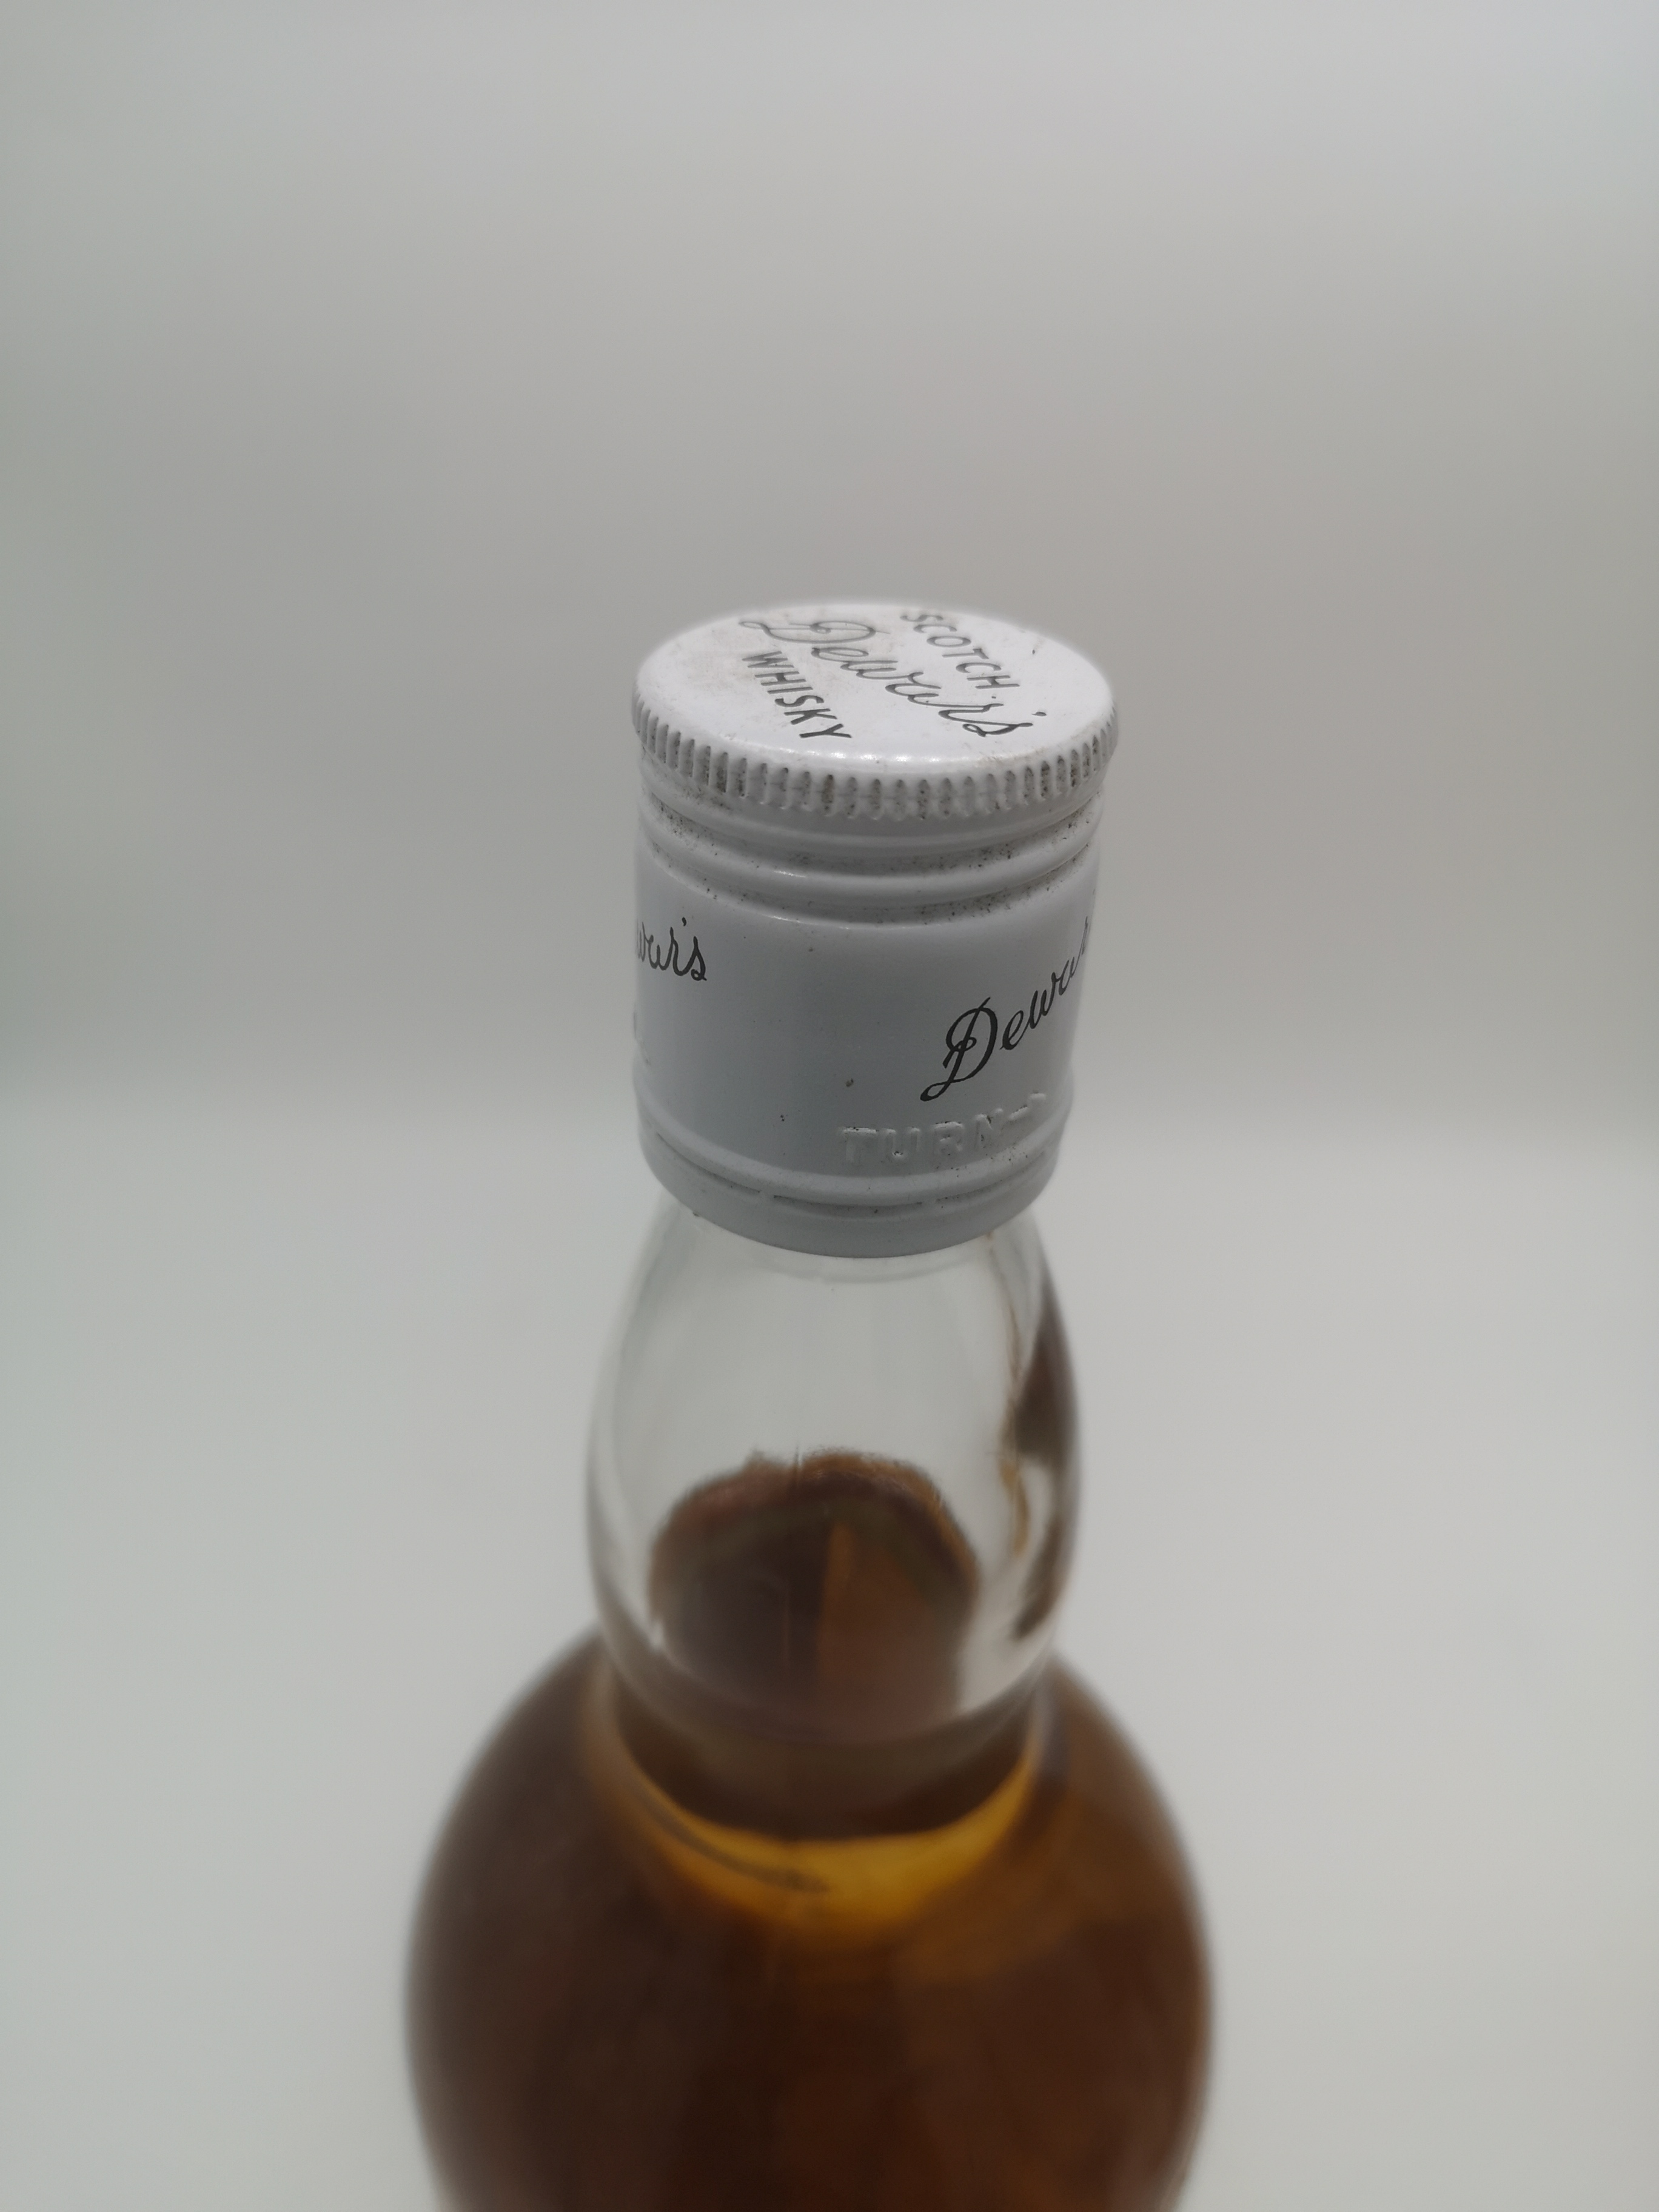 Two bottles of Dewar's Scotch whisky - Image 4 of 11